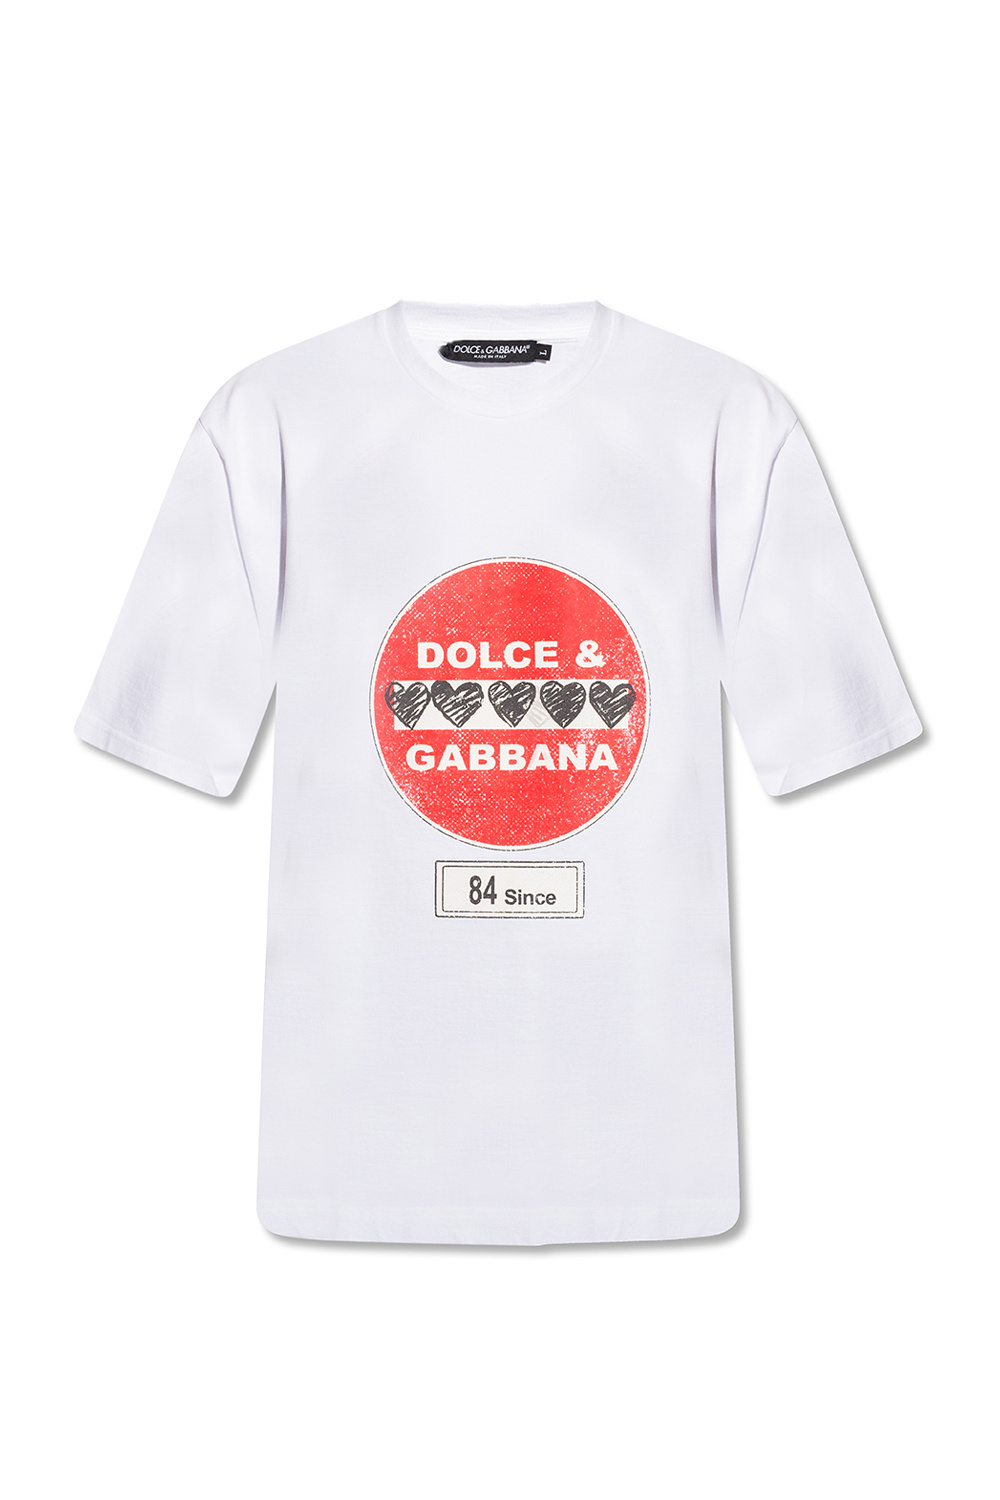 dolce trump & Gabbana Printed T-shirt